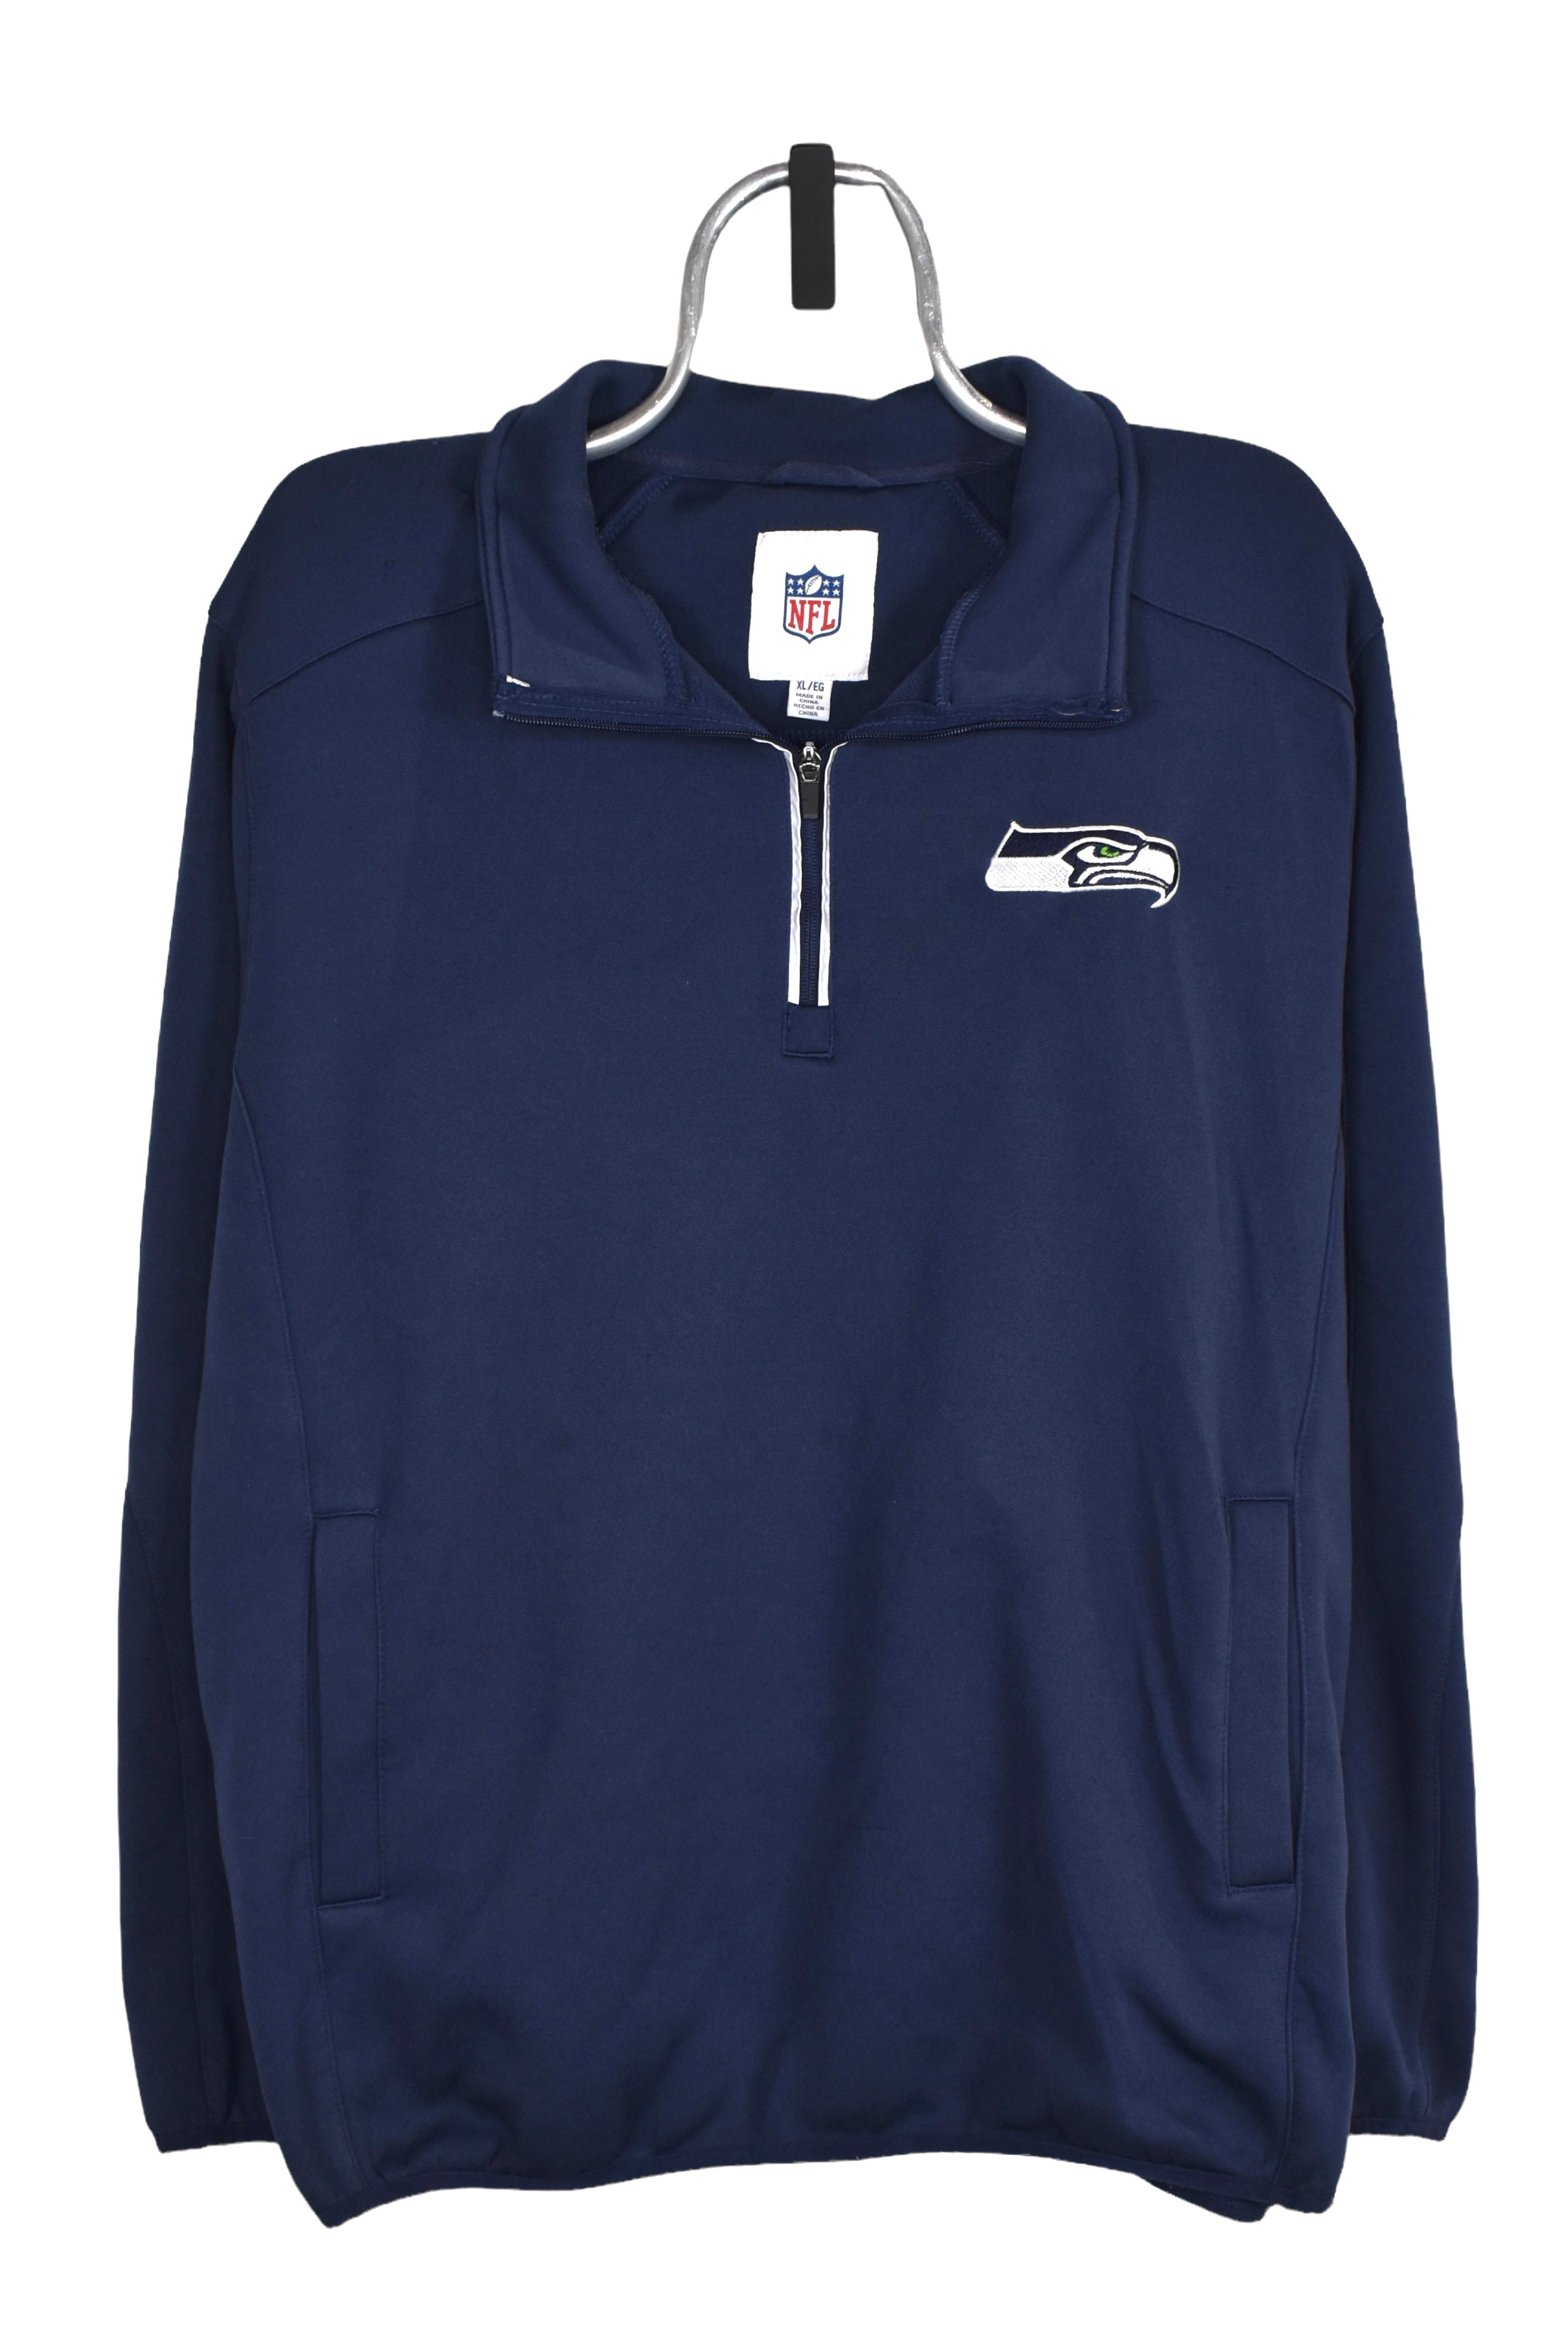 Vintage Seattle Seahawks 1/4 zip (XL), navy NFL embroidered sweatshirt